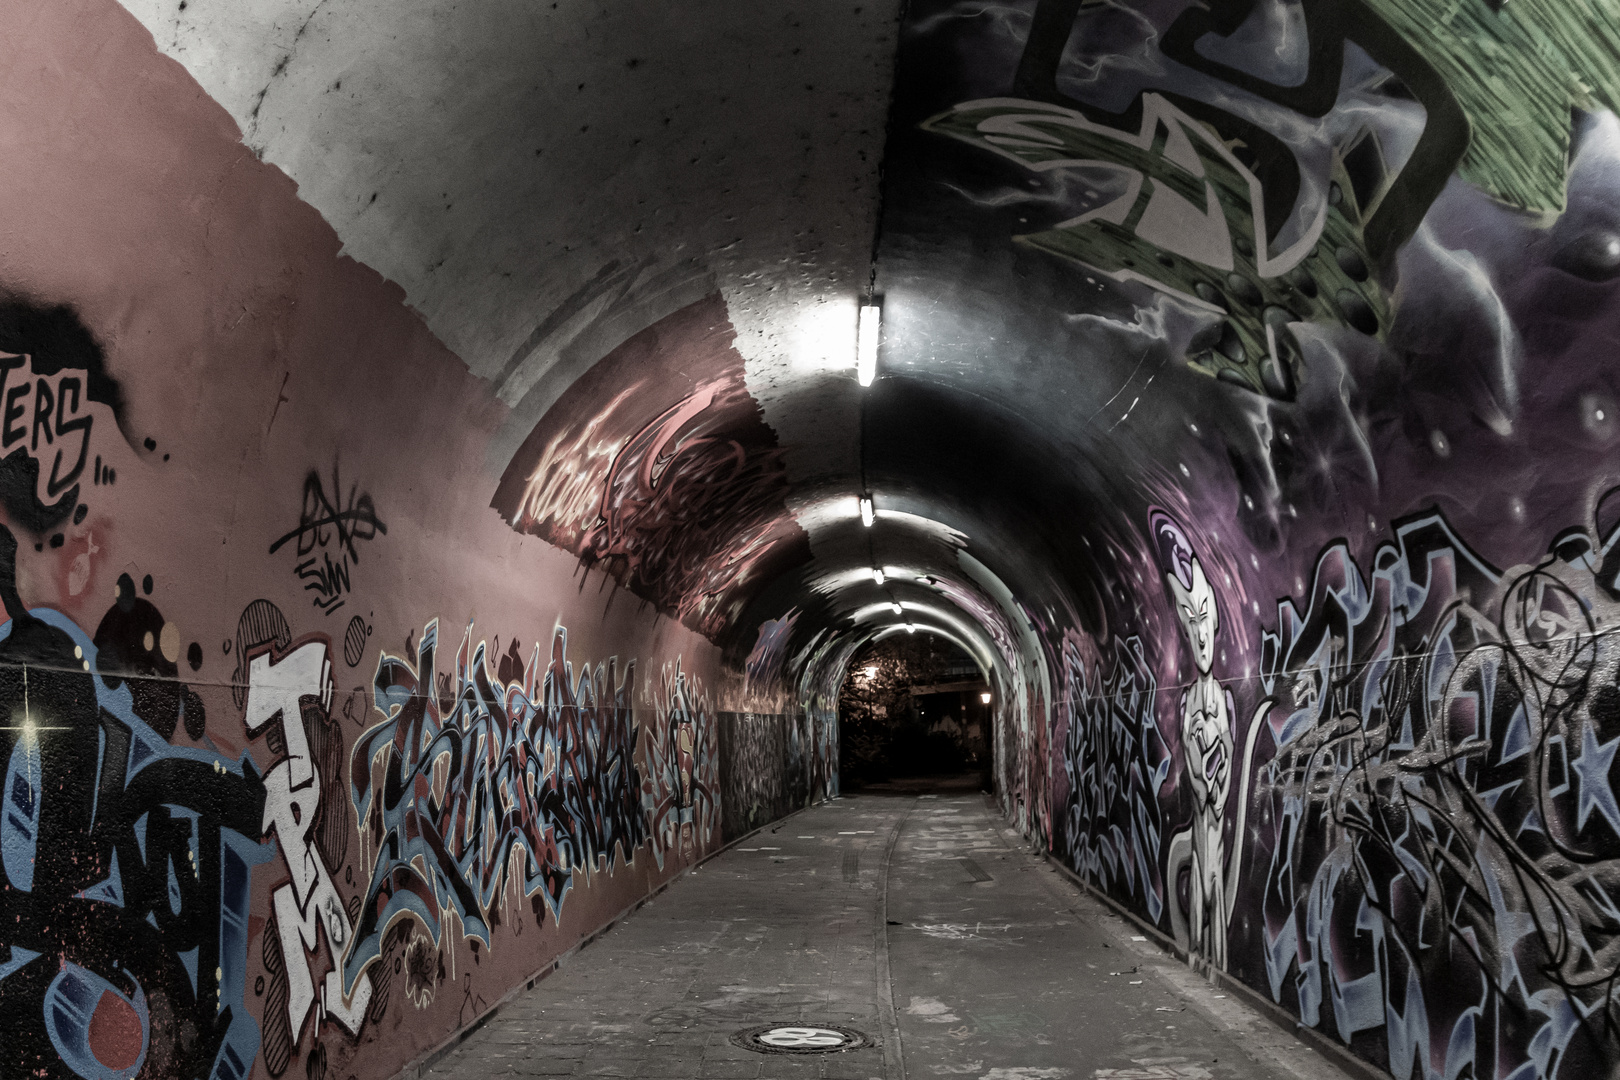 Graffiti im Tunnel